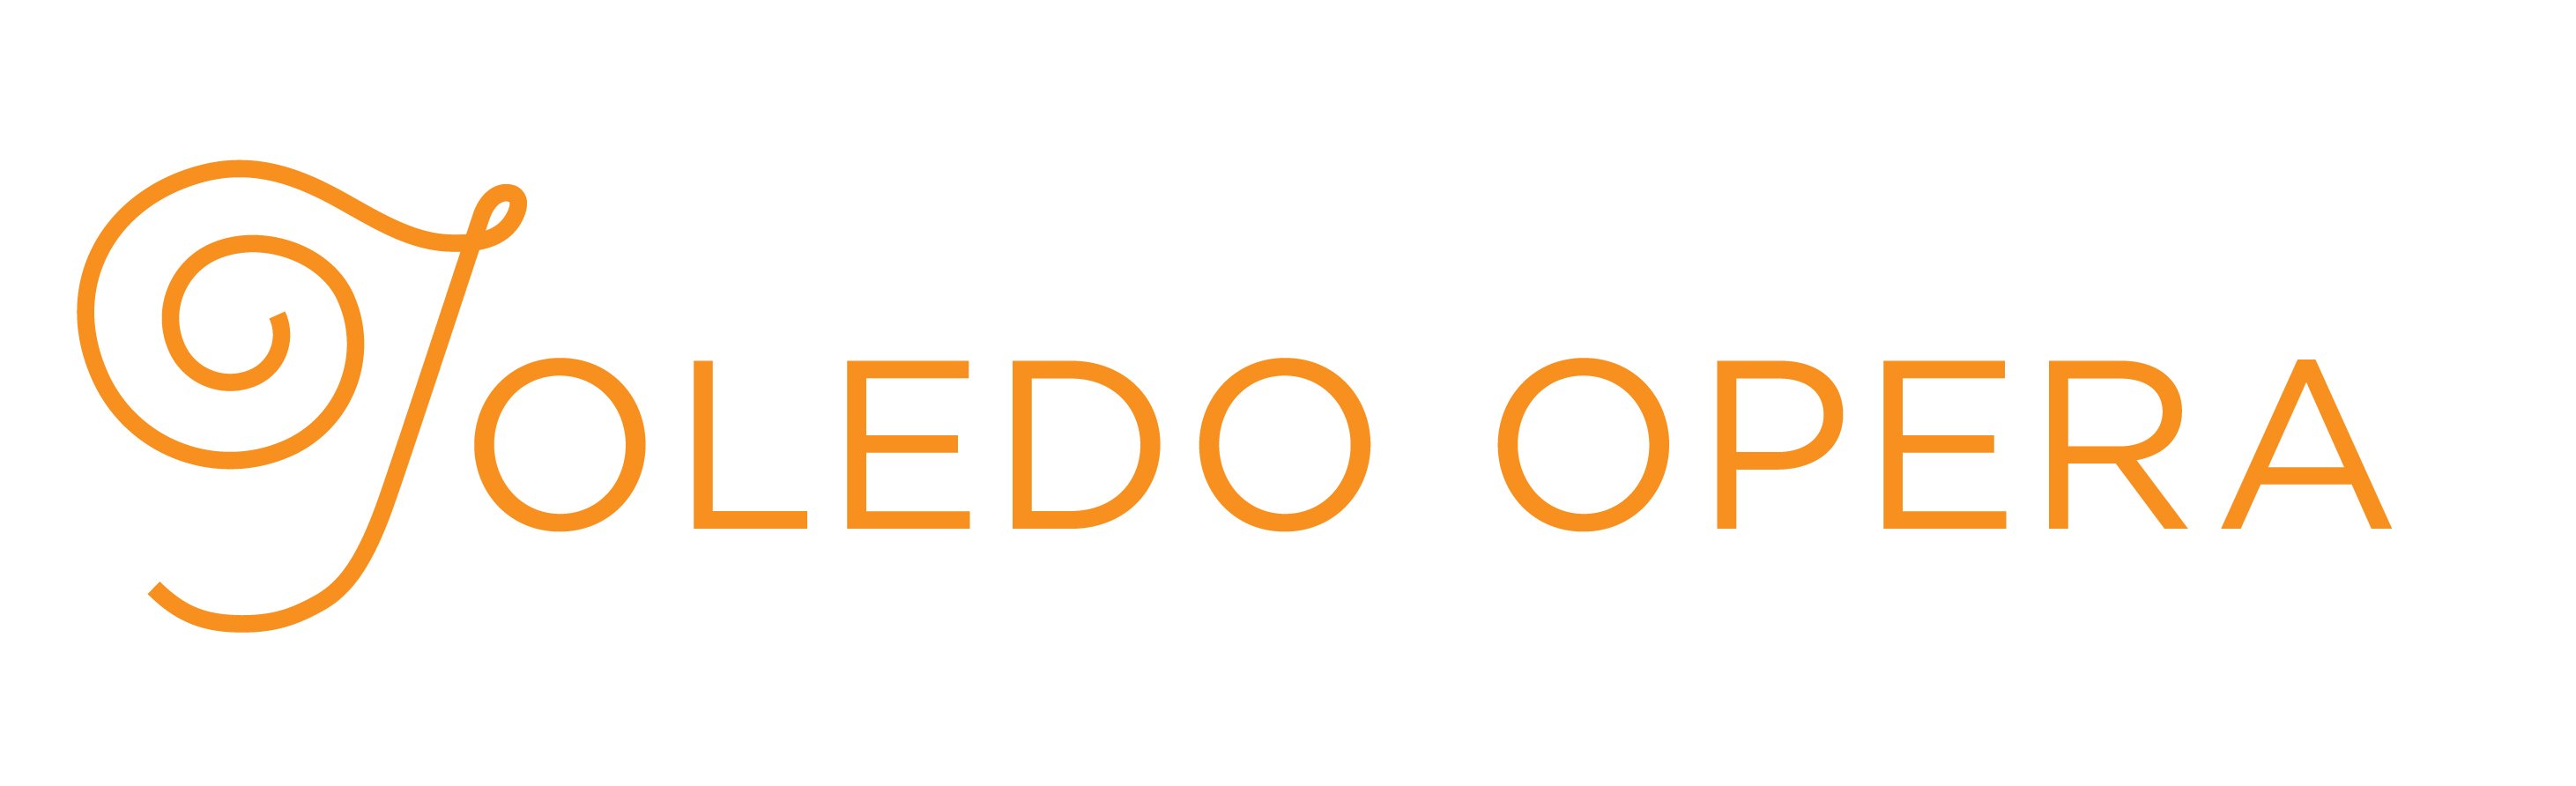 Toledo Opera Association logo